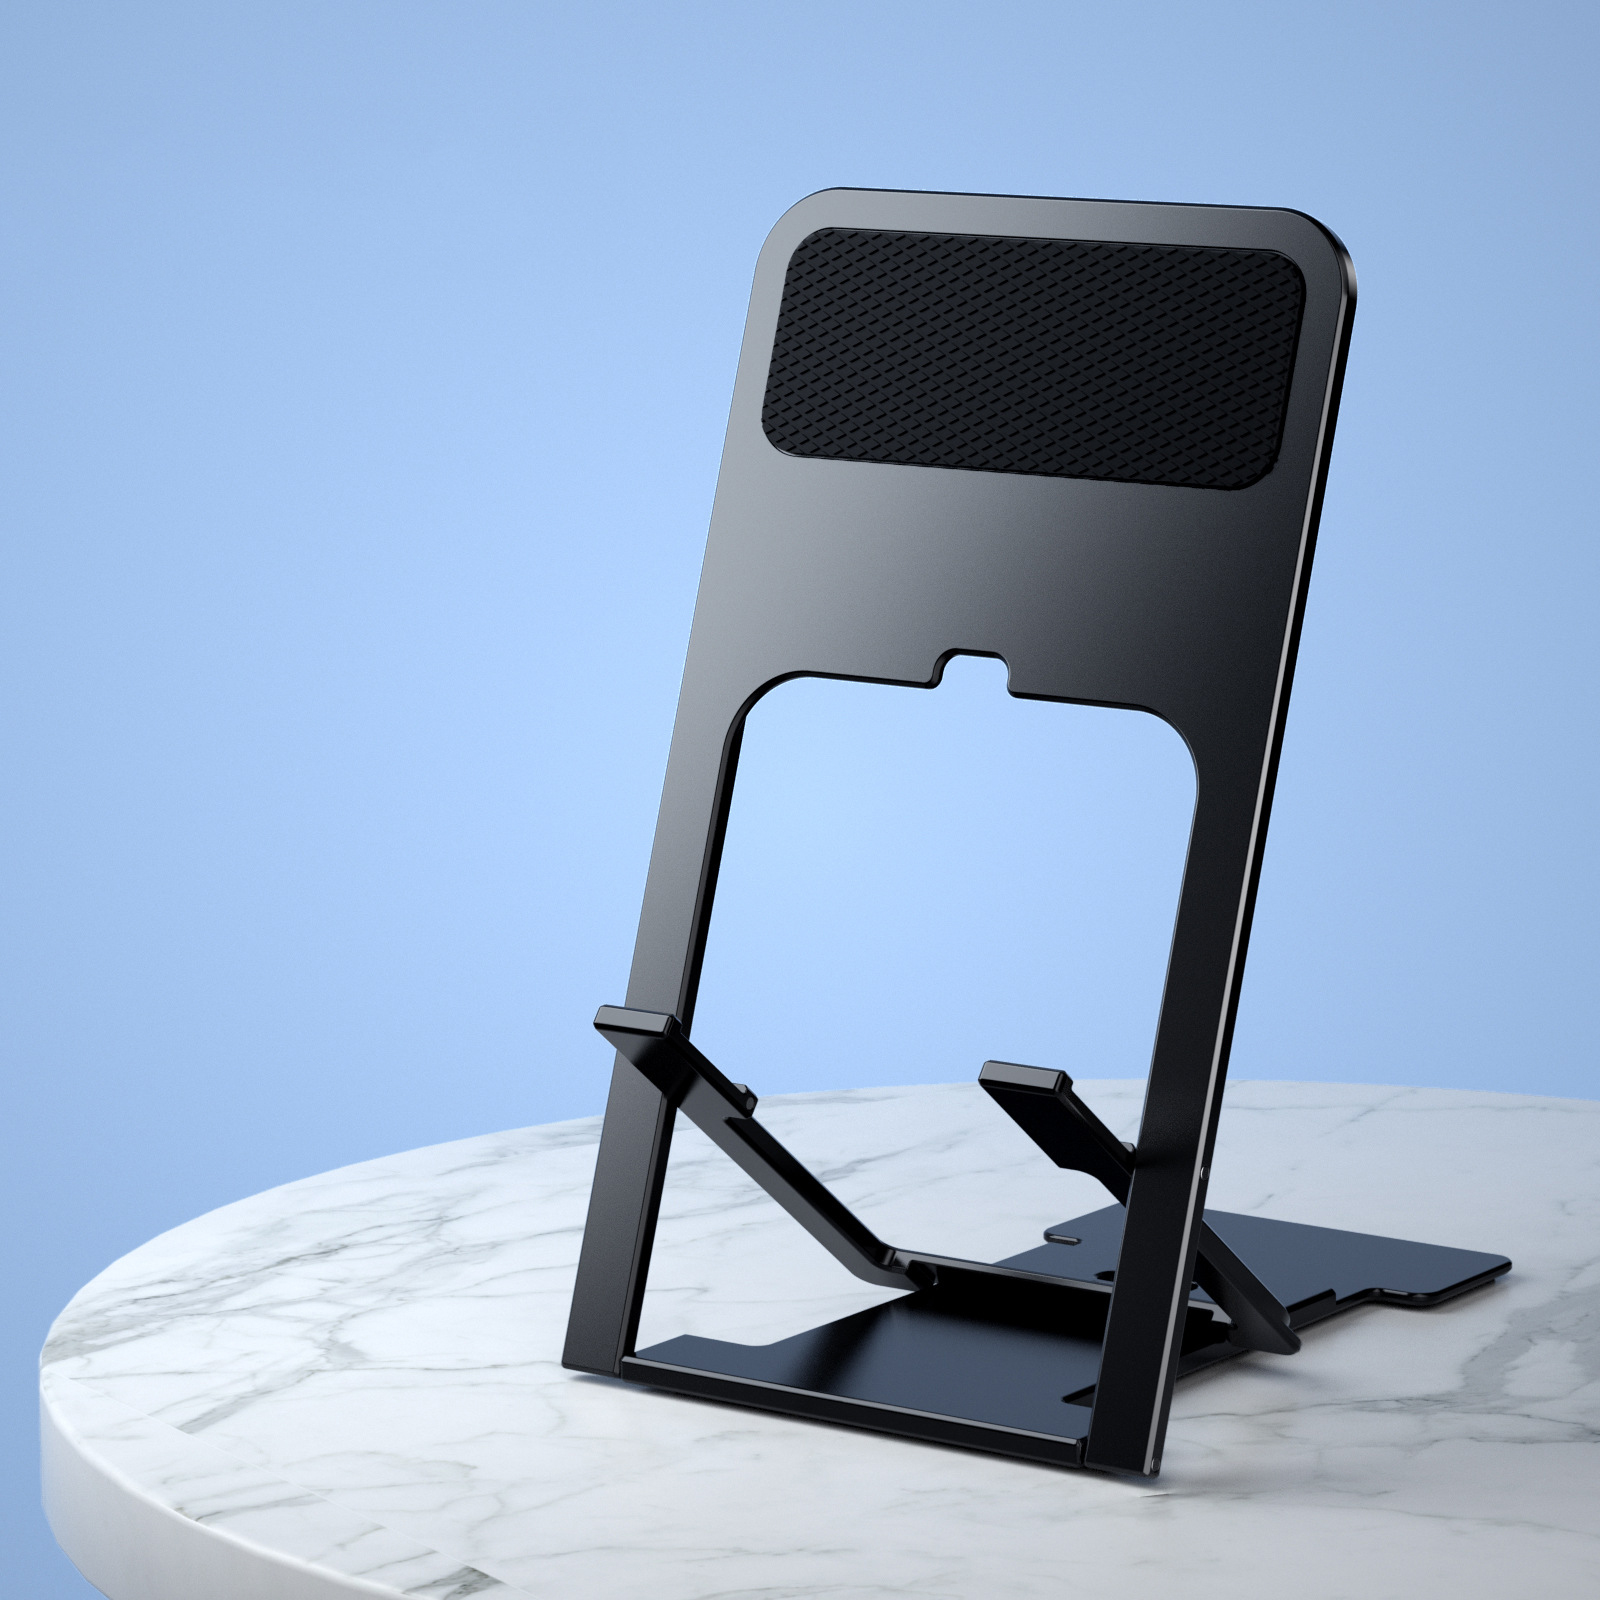 Z7 Mobile Phone Tablet Holder Abs Folding Stand Adjustable Bracket For 4.5-15 Inch Mobile Phone With Triangular Design black